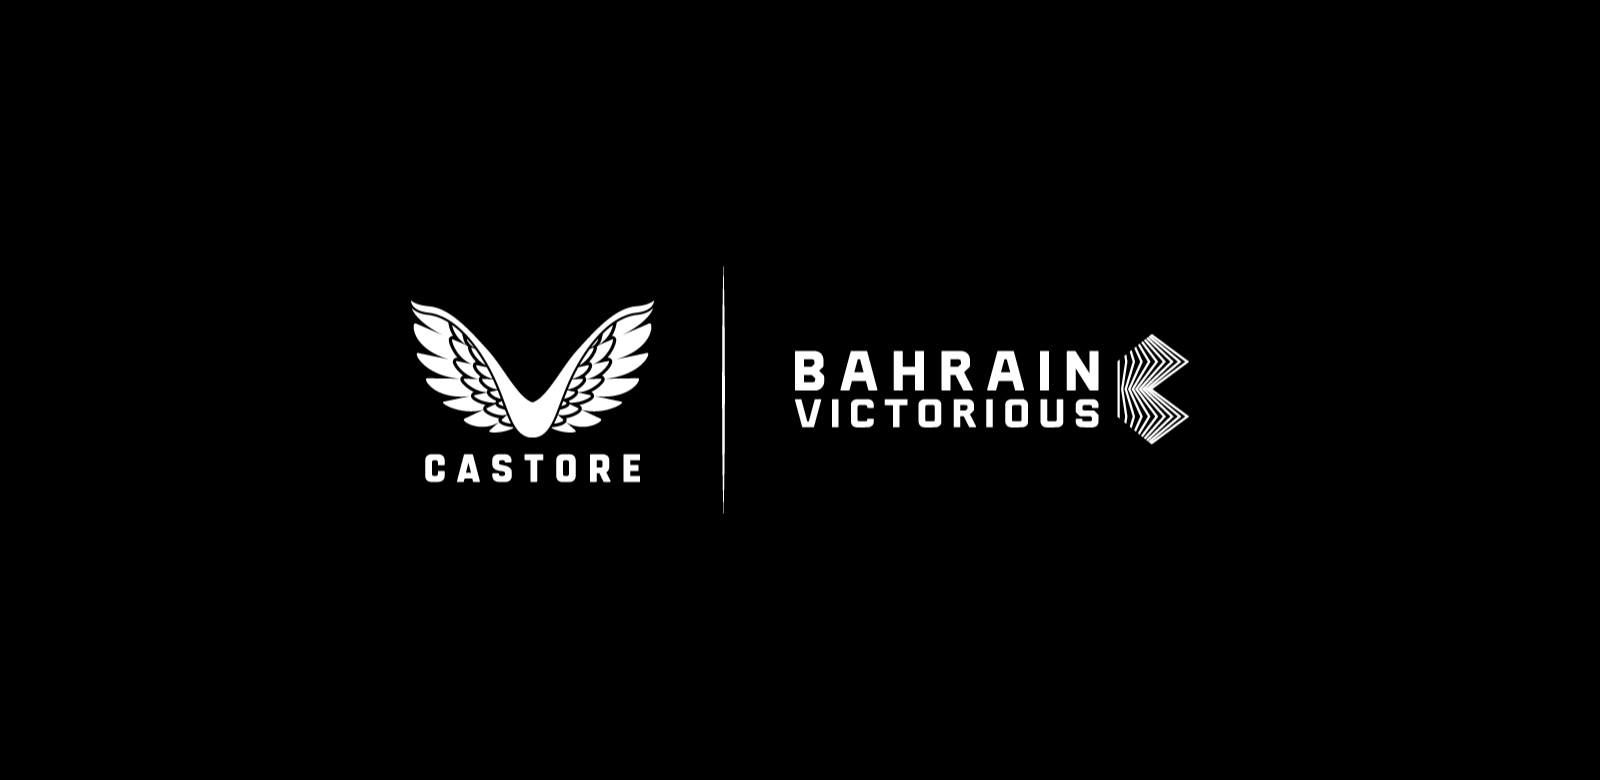 Castore announces multi-year partnership with Team Bahrain Victorious